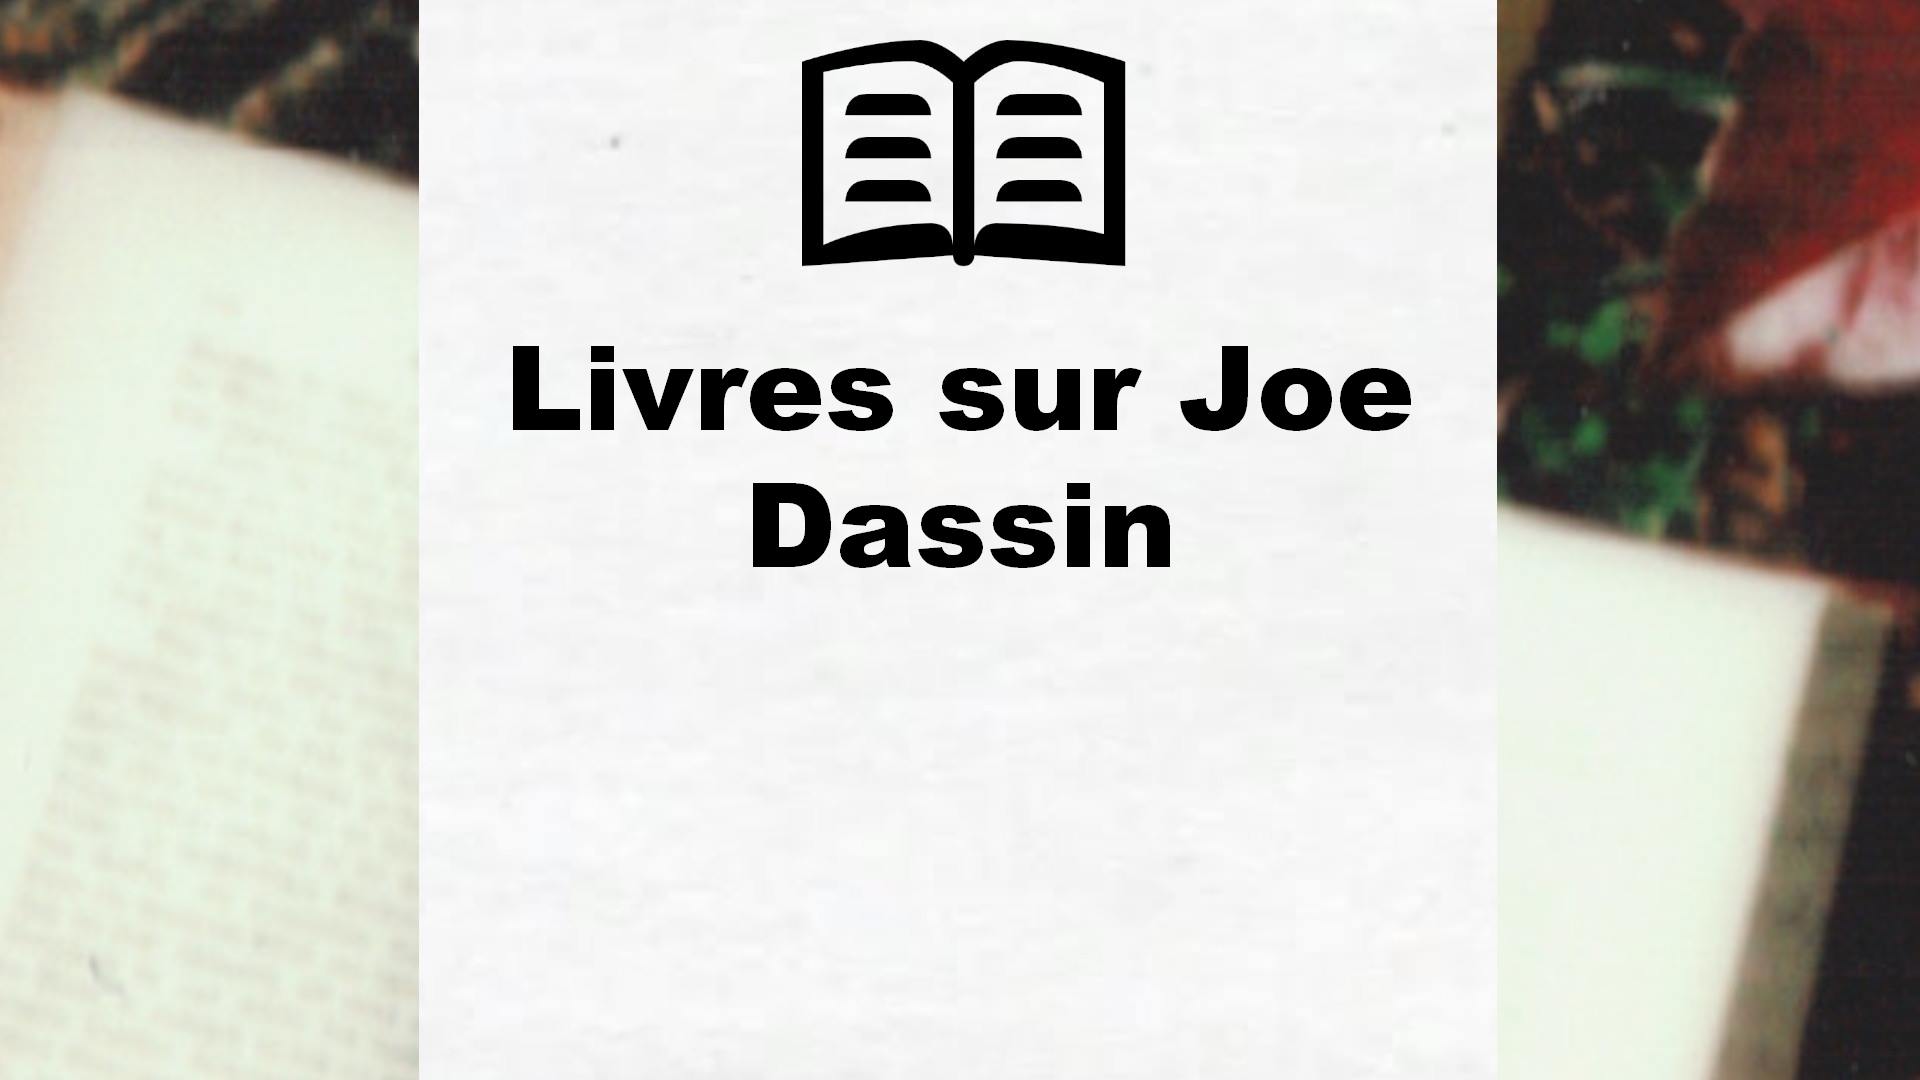 Livres sur Joe Dassin